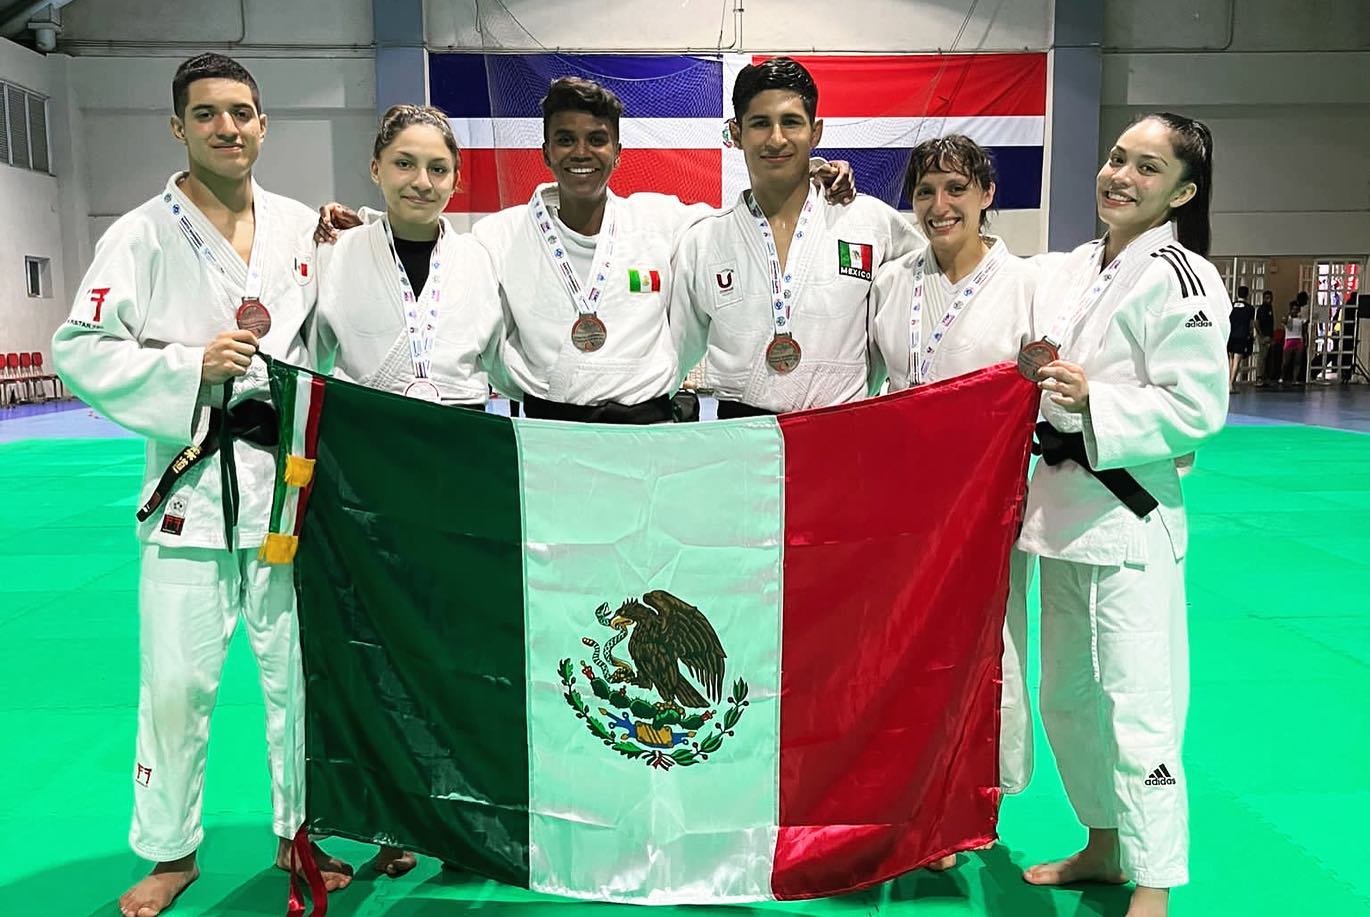 Judocas concluyen gira continental con seis medallas en Colombia